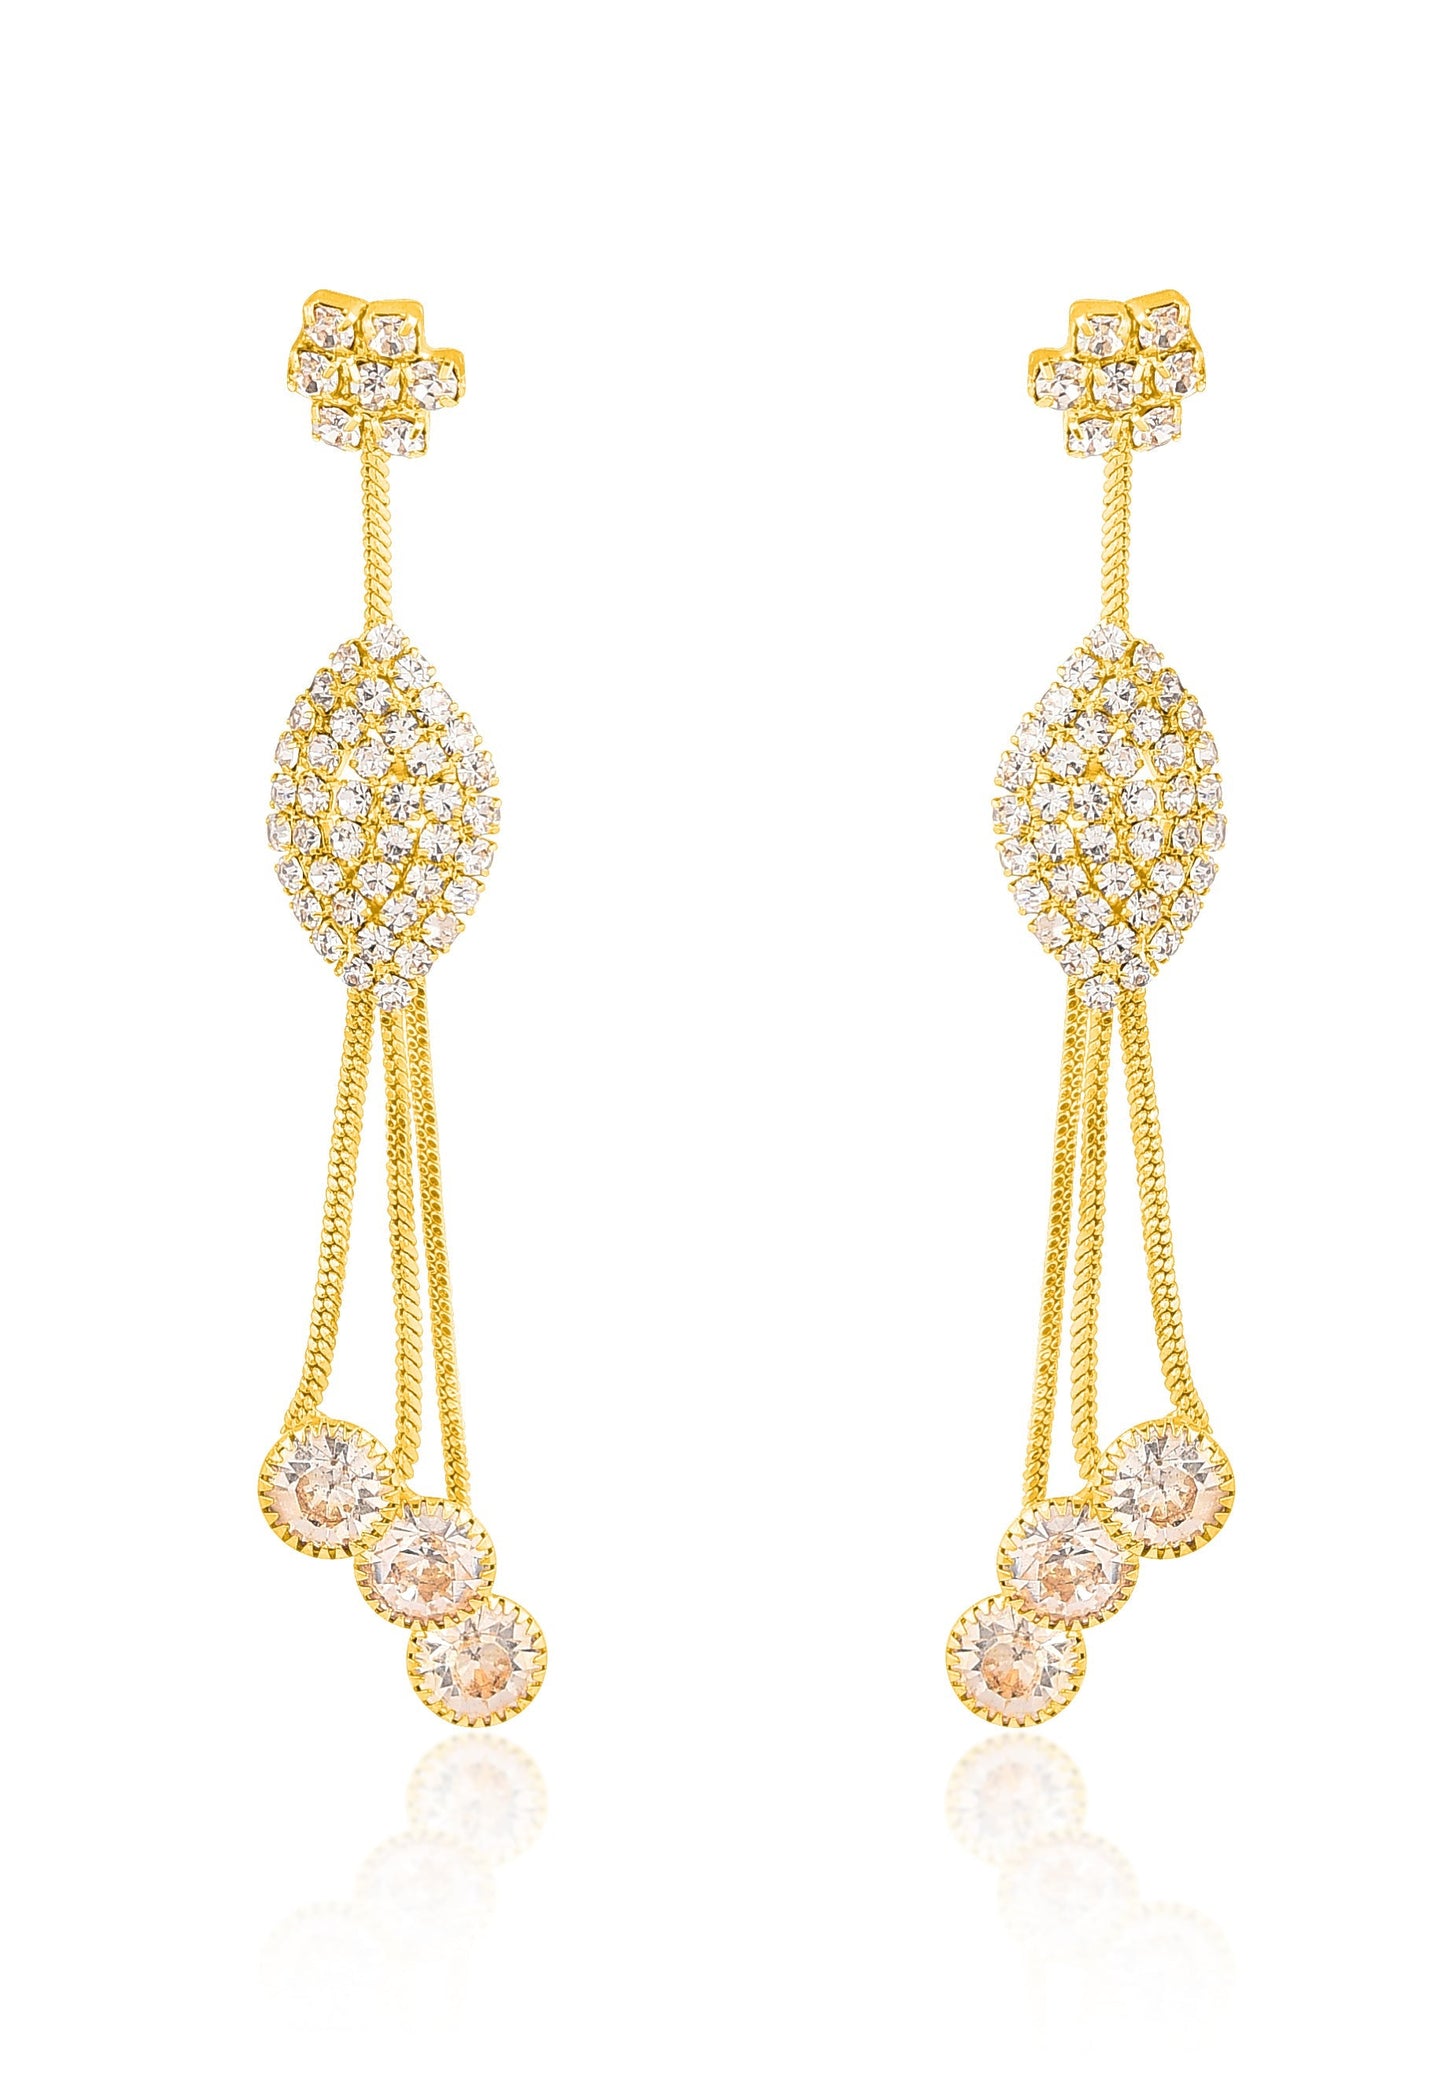 Bhagya Lakshmi Necklace and Earrings Set